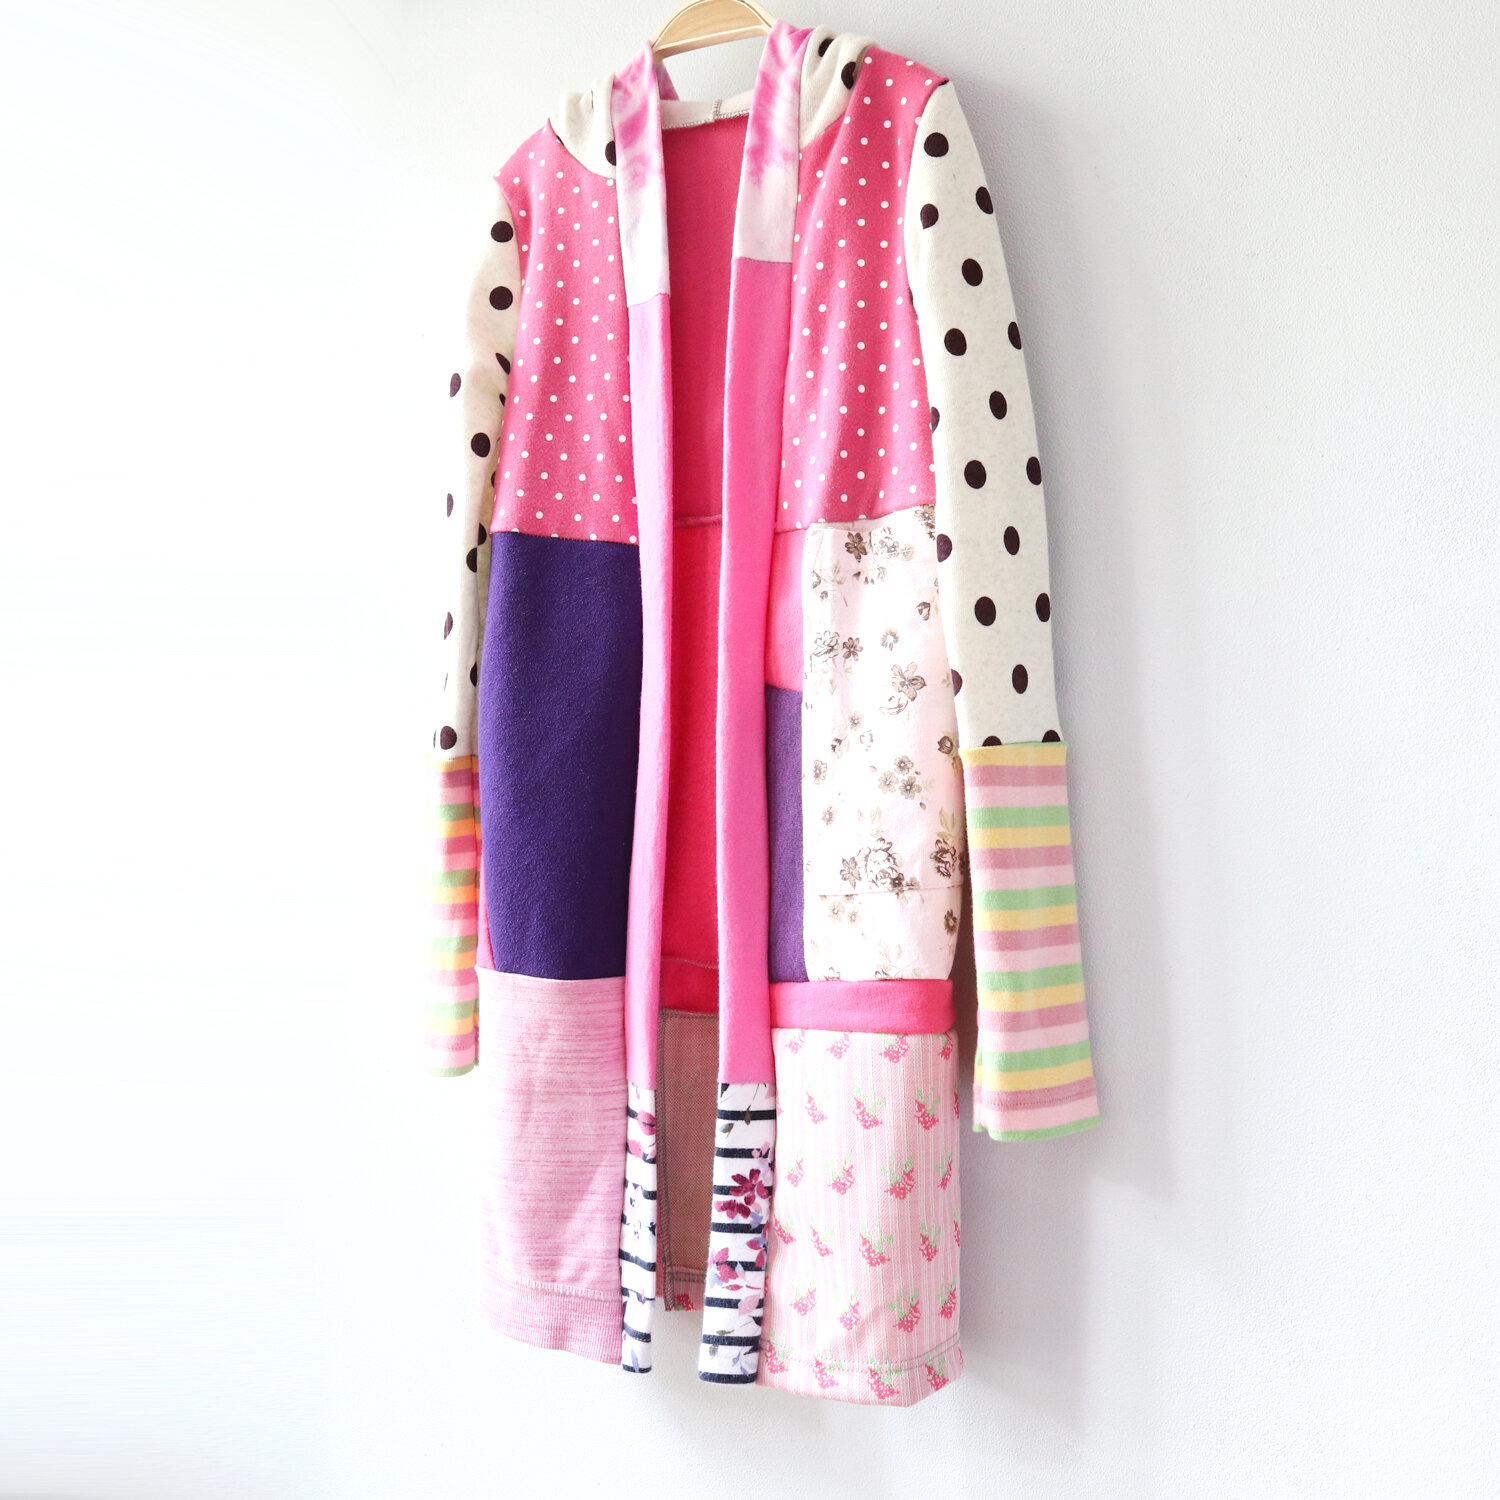 side wall 8:10 polkadots:pink:hooded:robe:cardigan.jpg